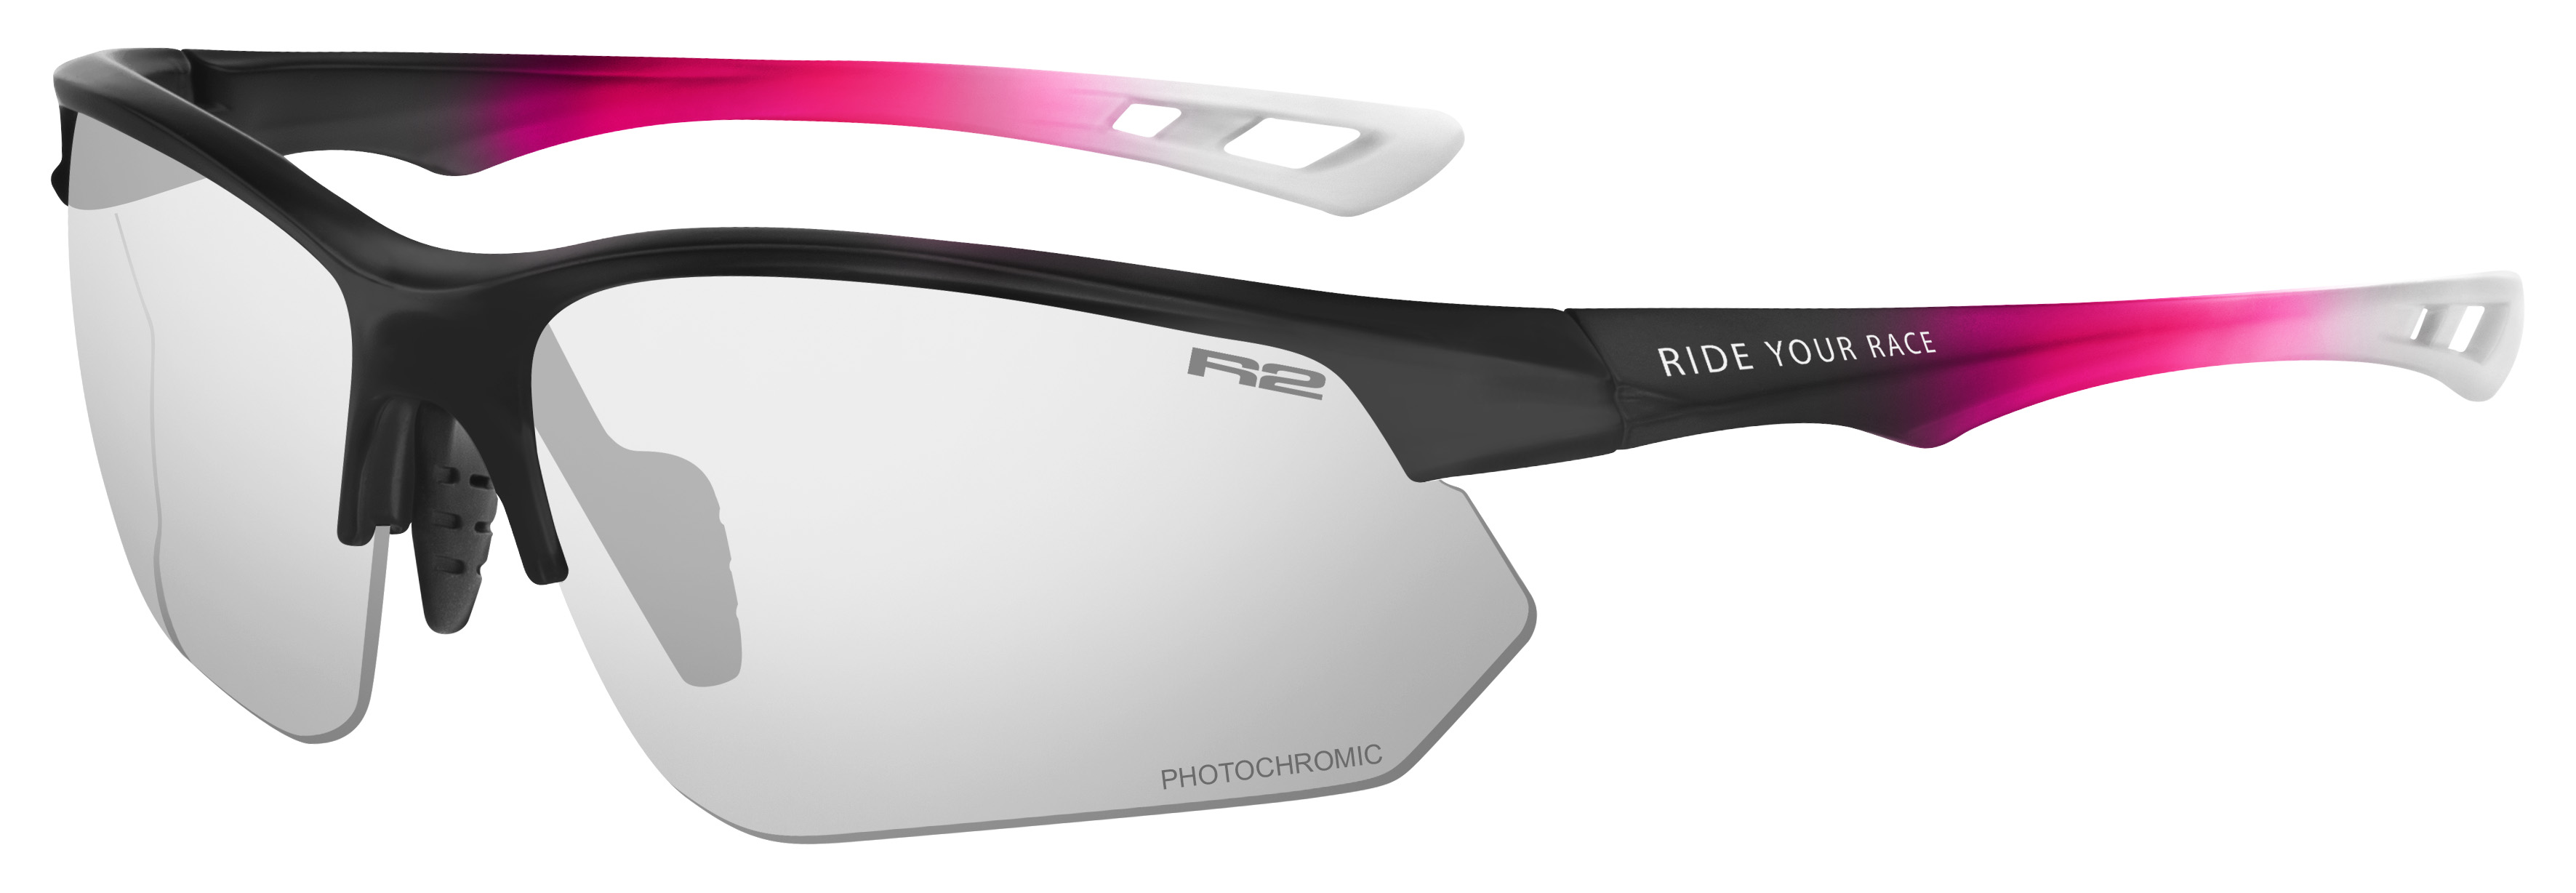 Photochromatic sunglasses  R2 DROP AT099I standard